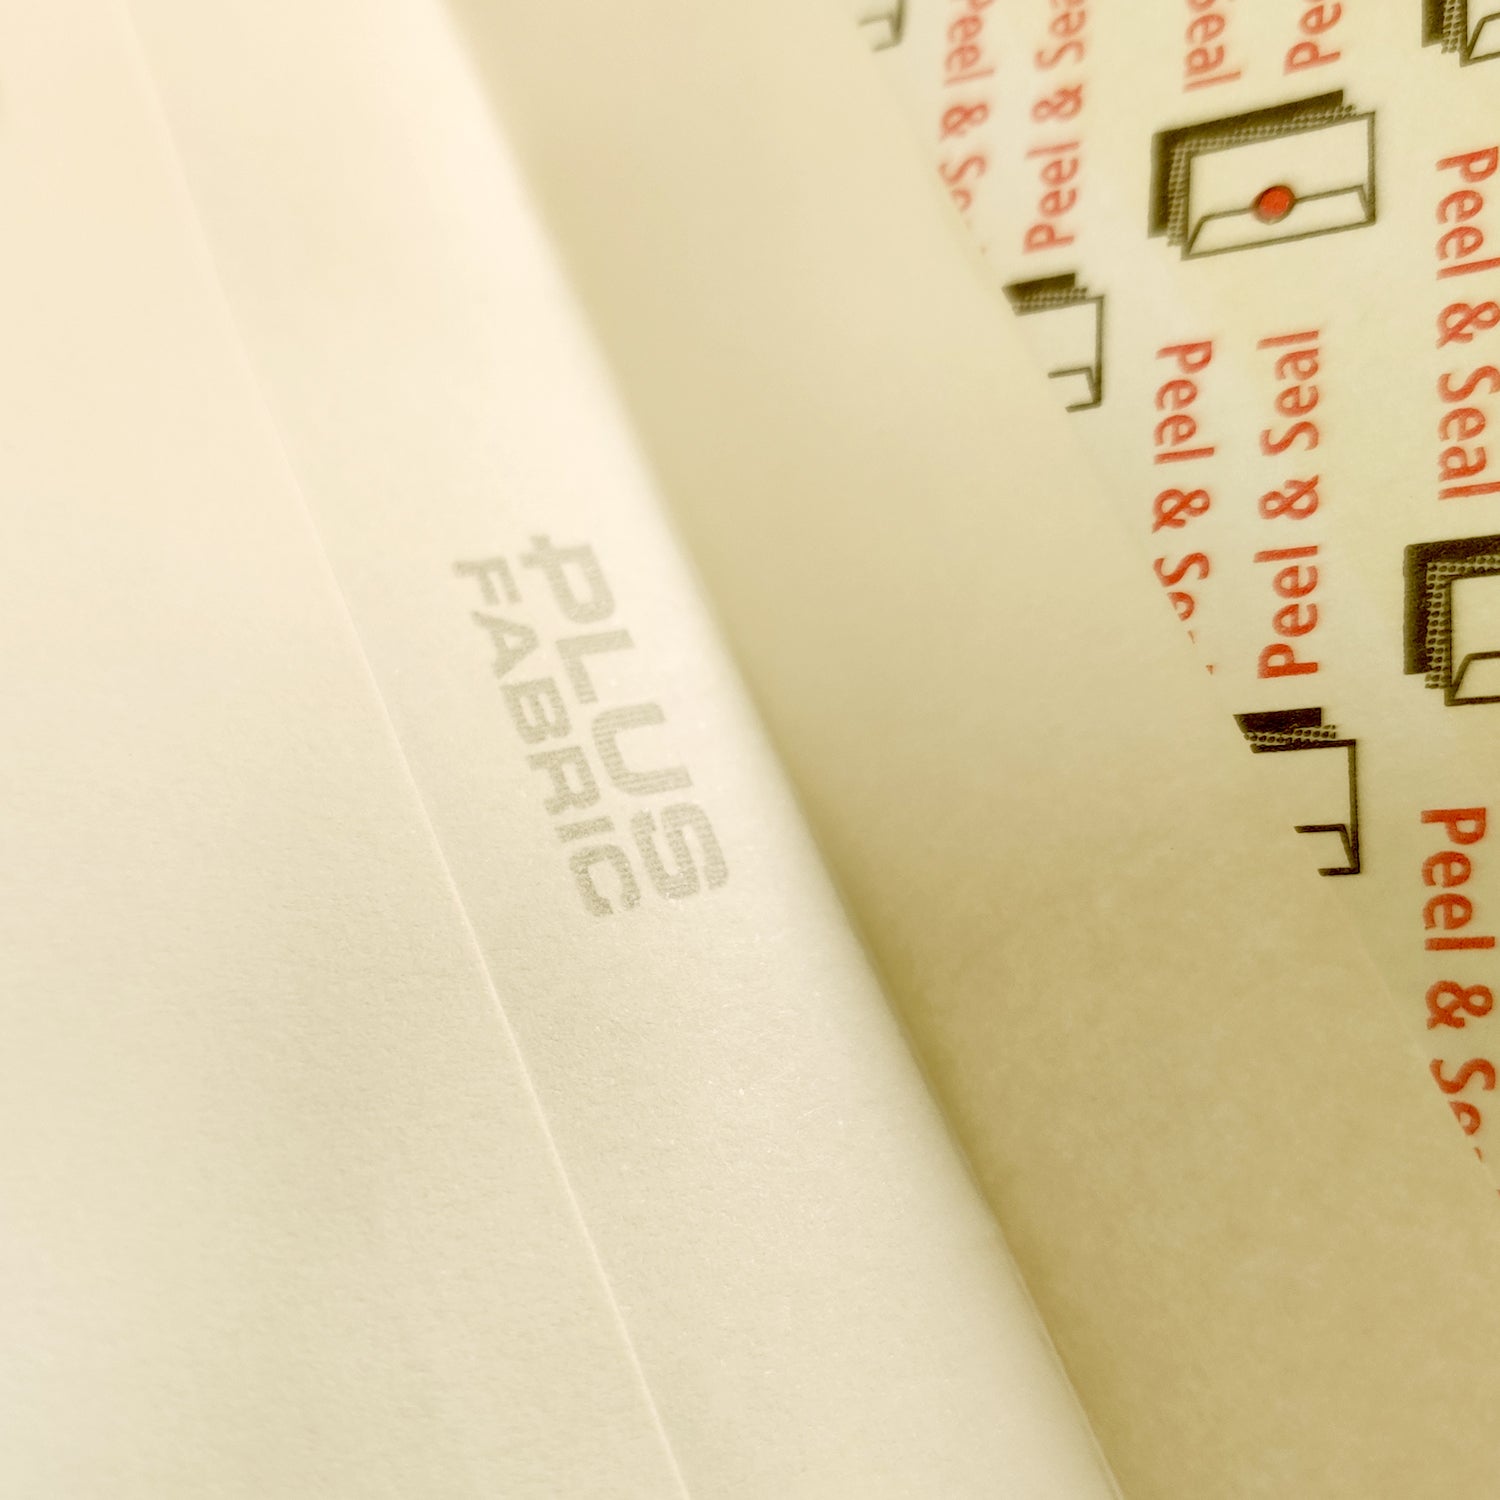 DL Ivory Prestige Business Envelope 100gsm Peel & Seal [Qty 500] 110 x 220mm - All Colour Envelopes